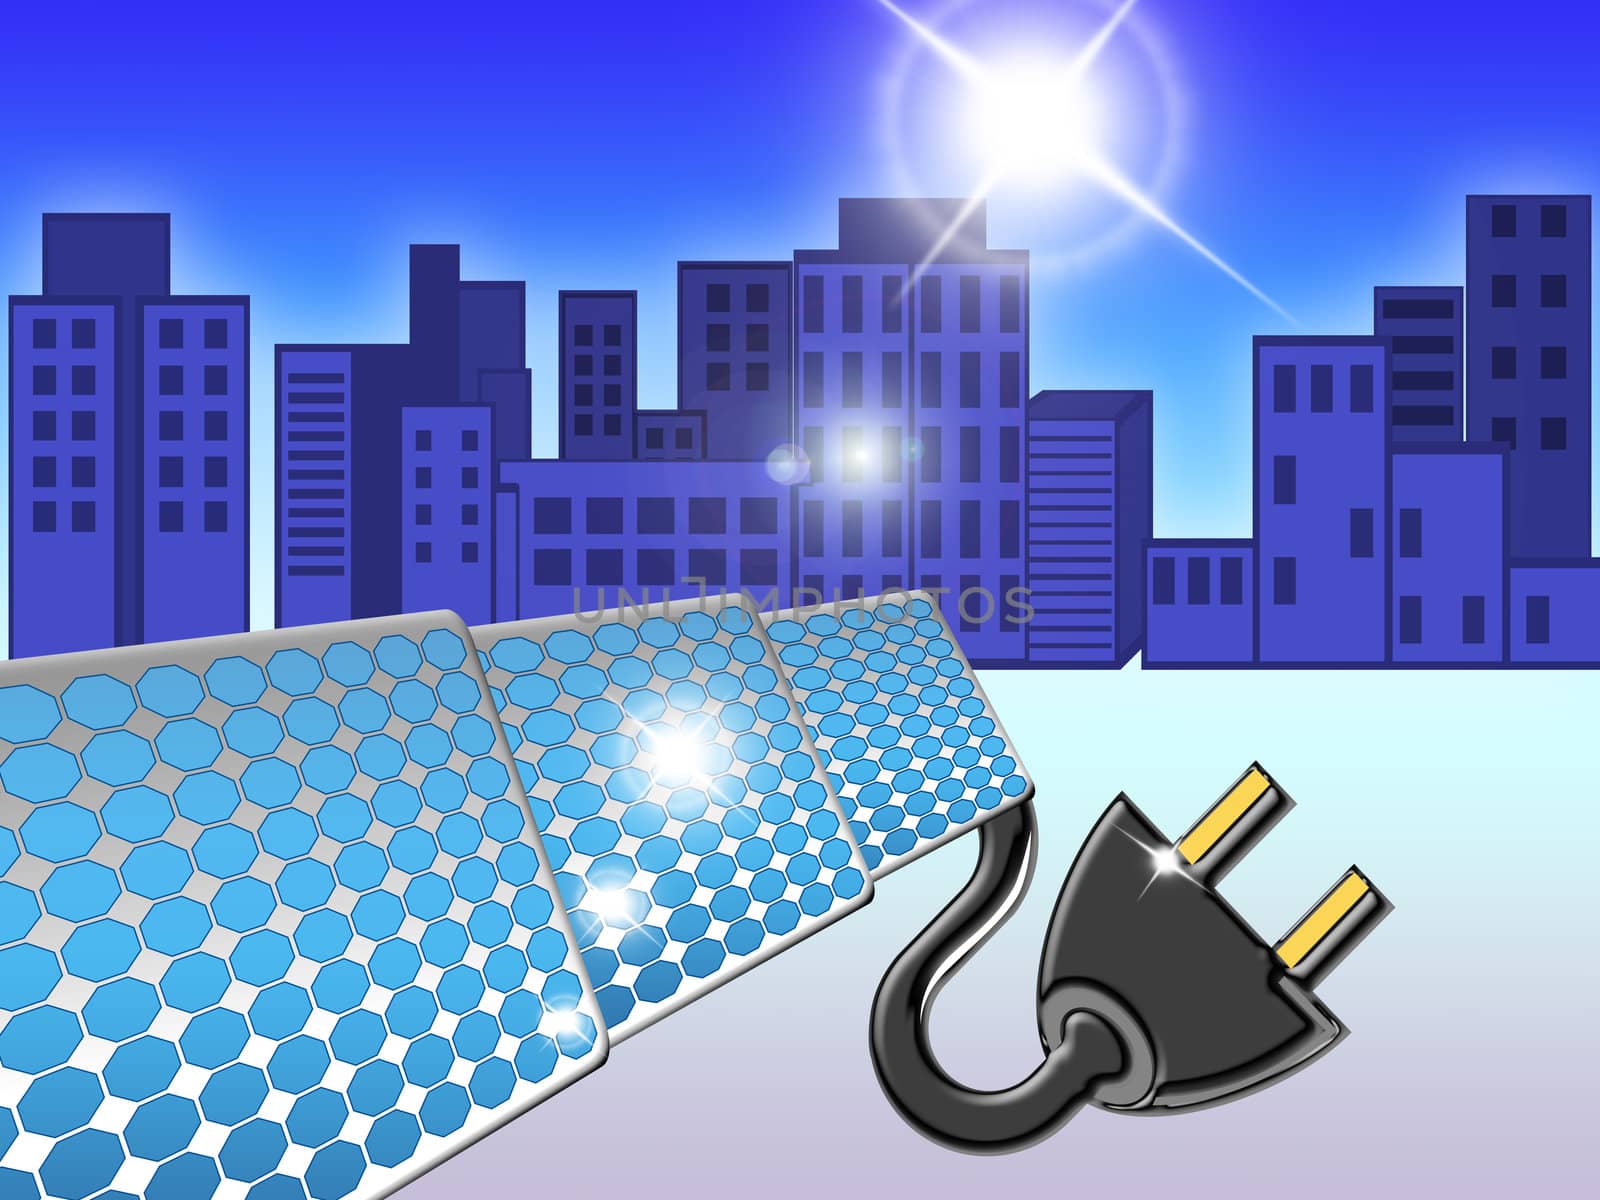 Solar panels provide power for the city
